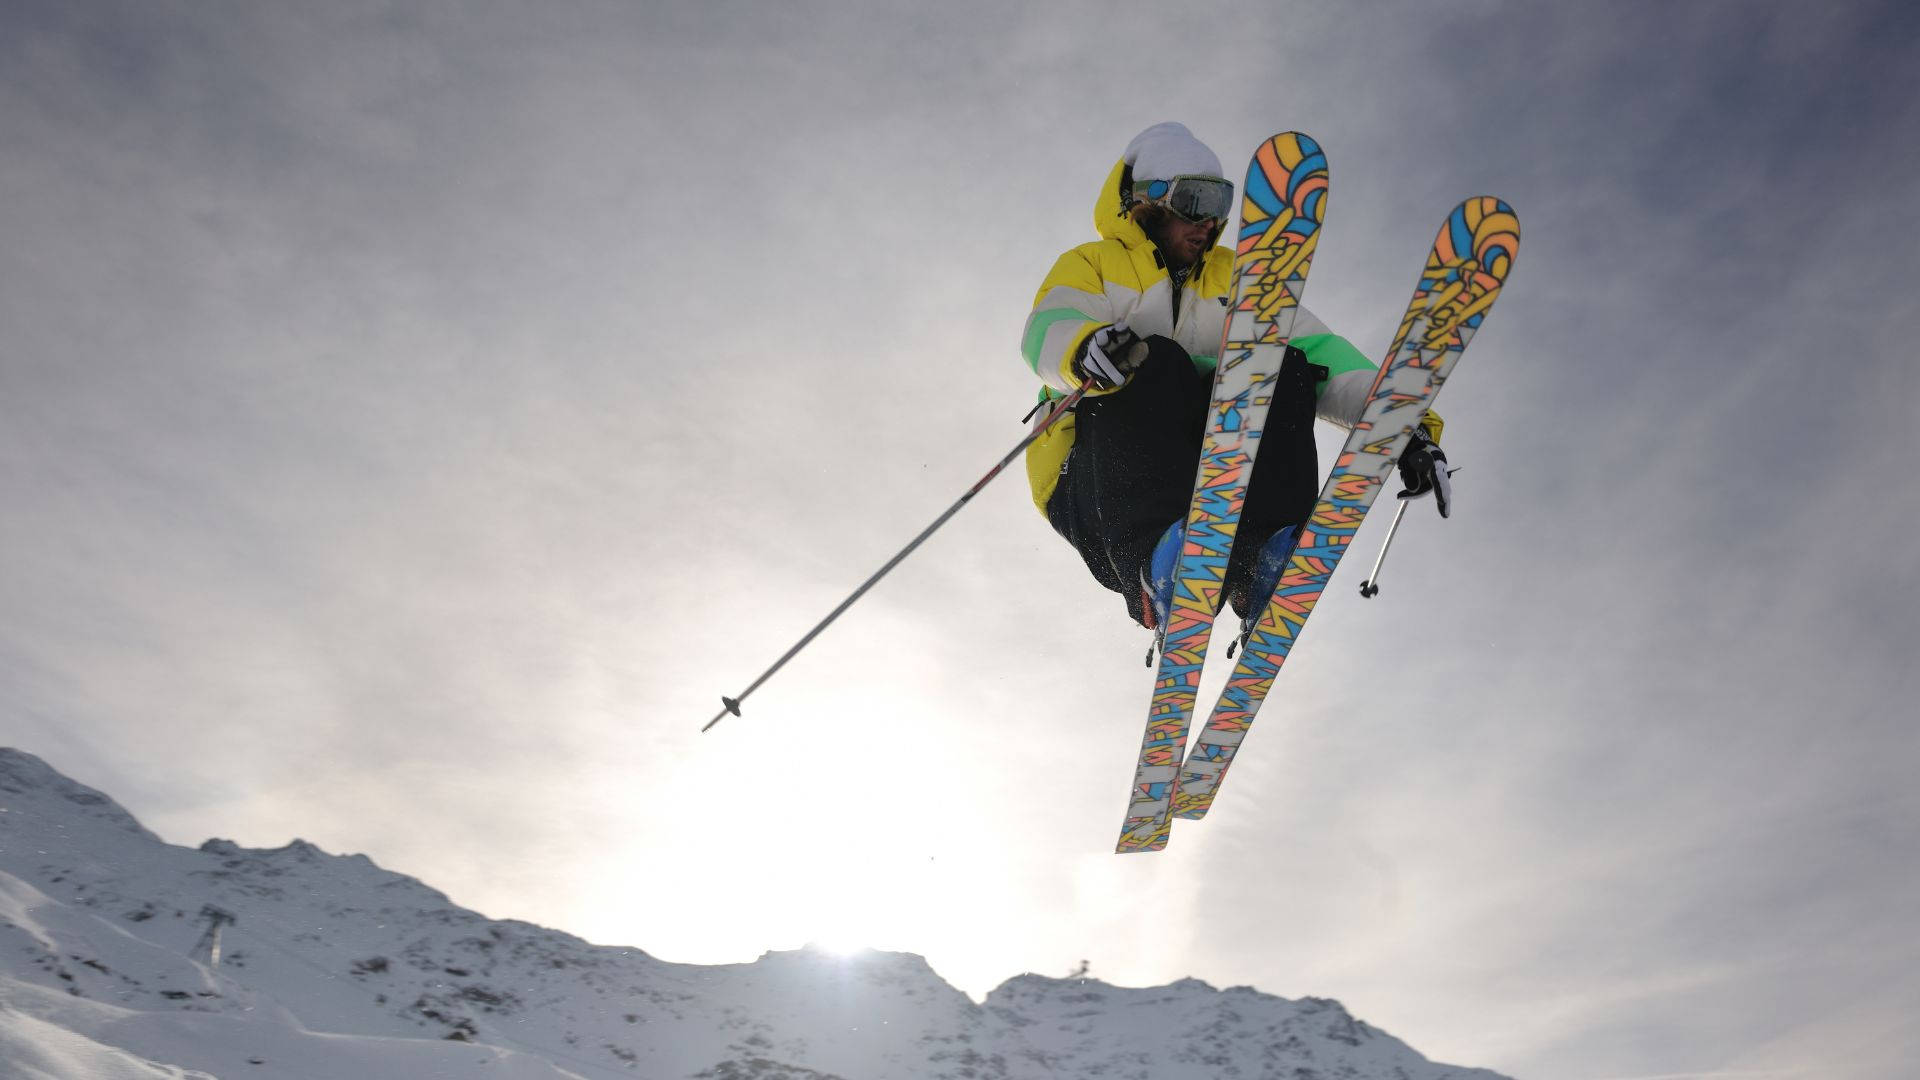 Caption: Intense Action Mid-Air - Ski Jumper In Motion Wallpaper